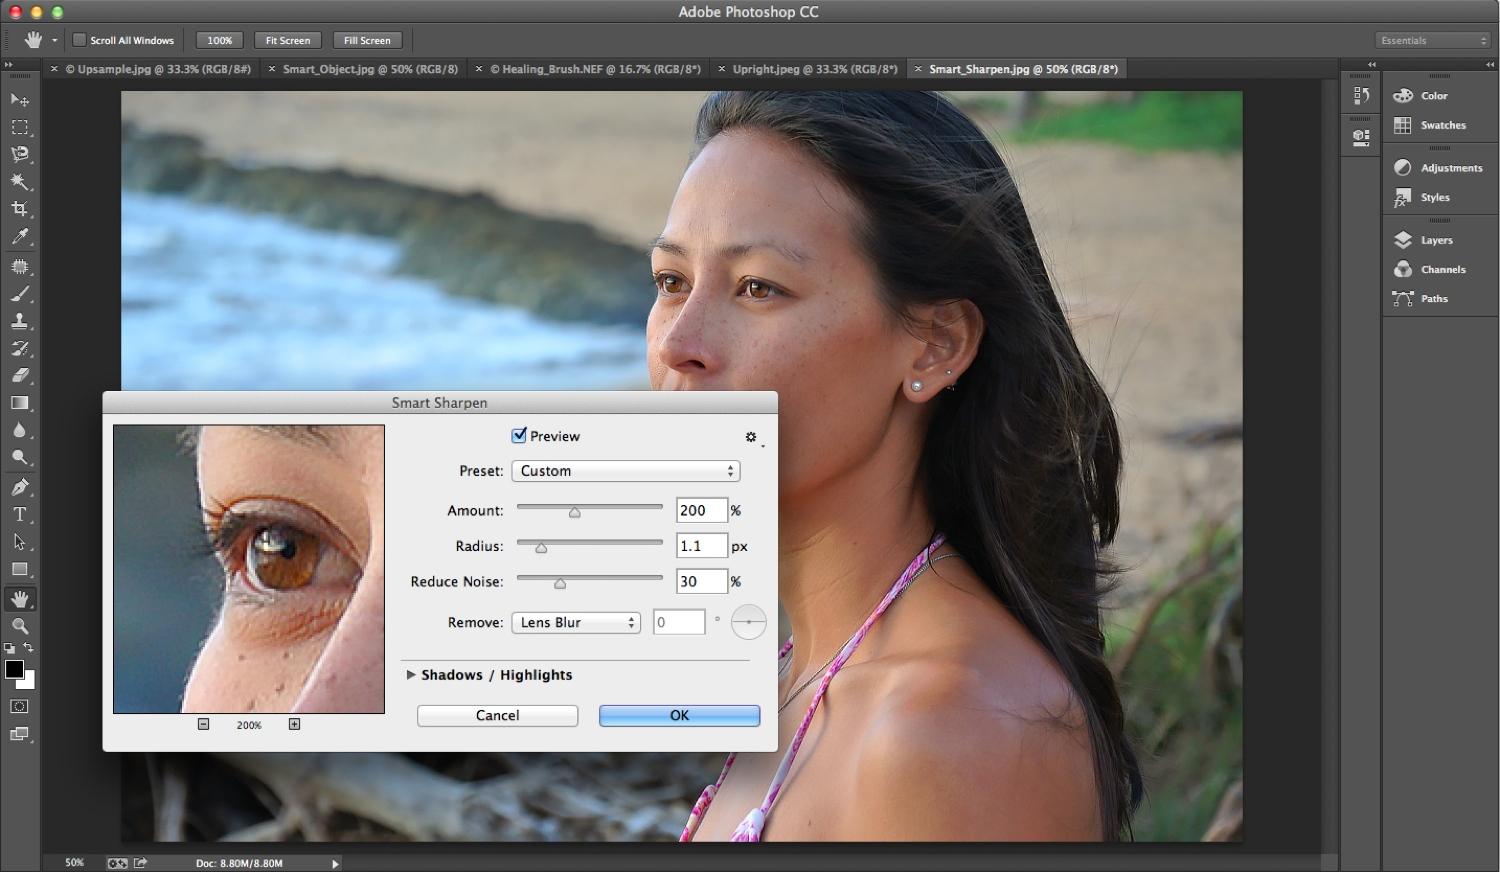 Adobe Photoshop CC Free setup download